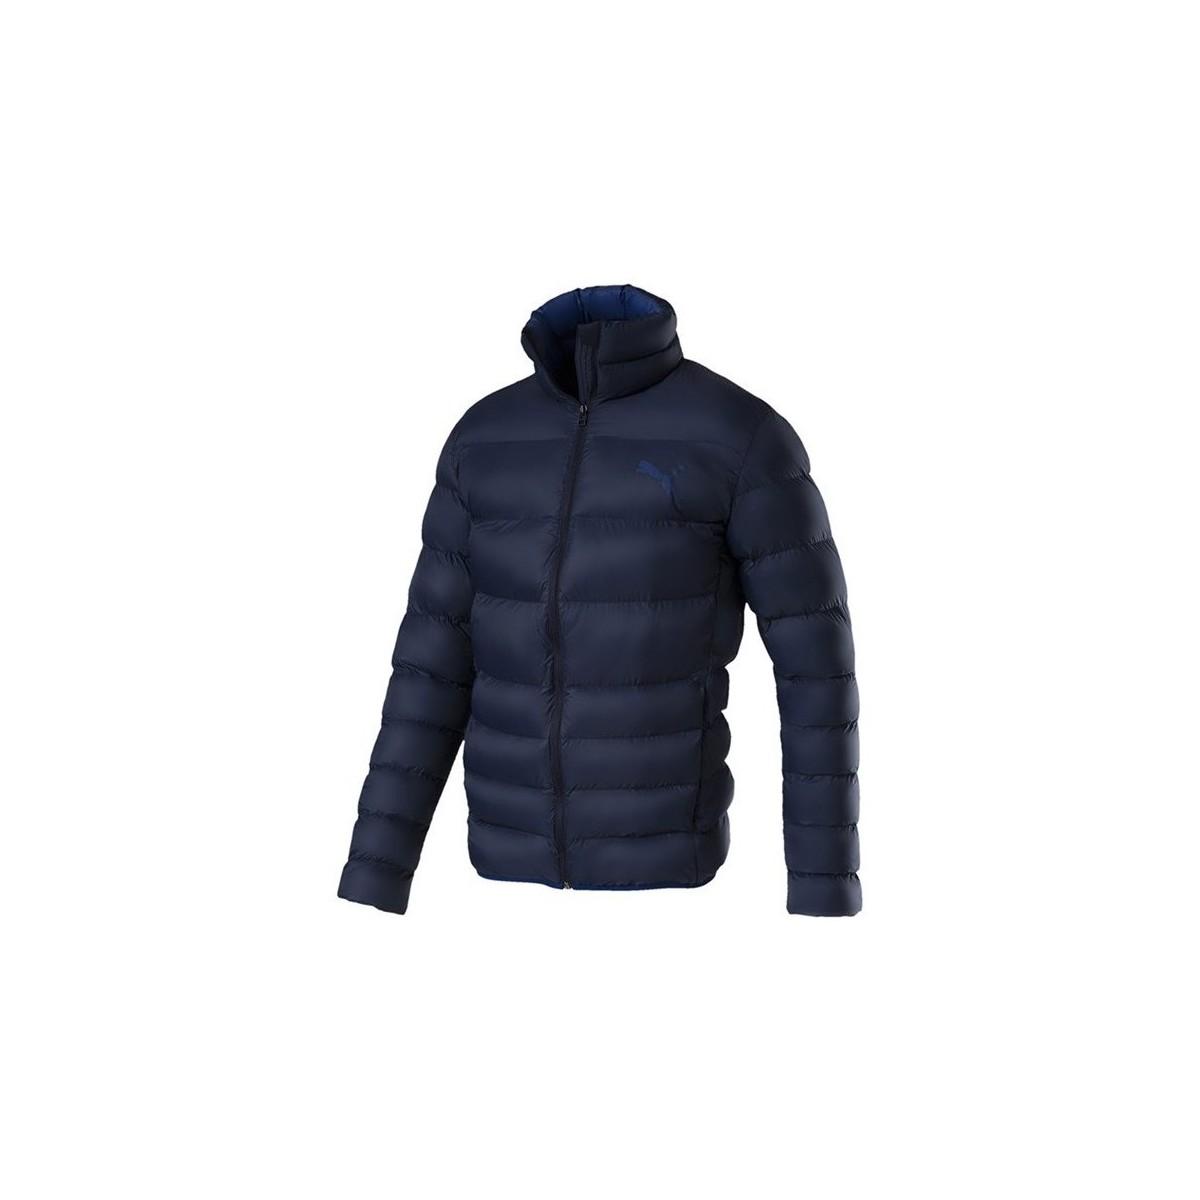 puma warmcell ultralight hooded jacket